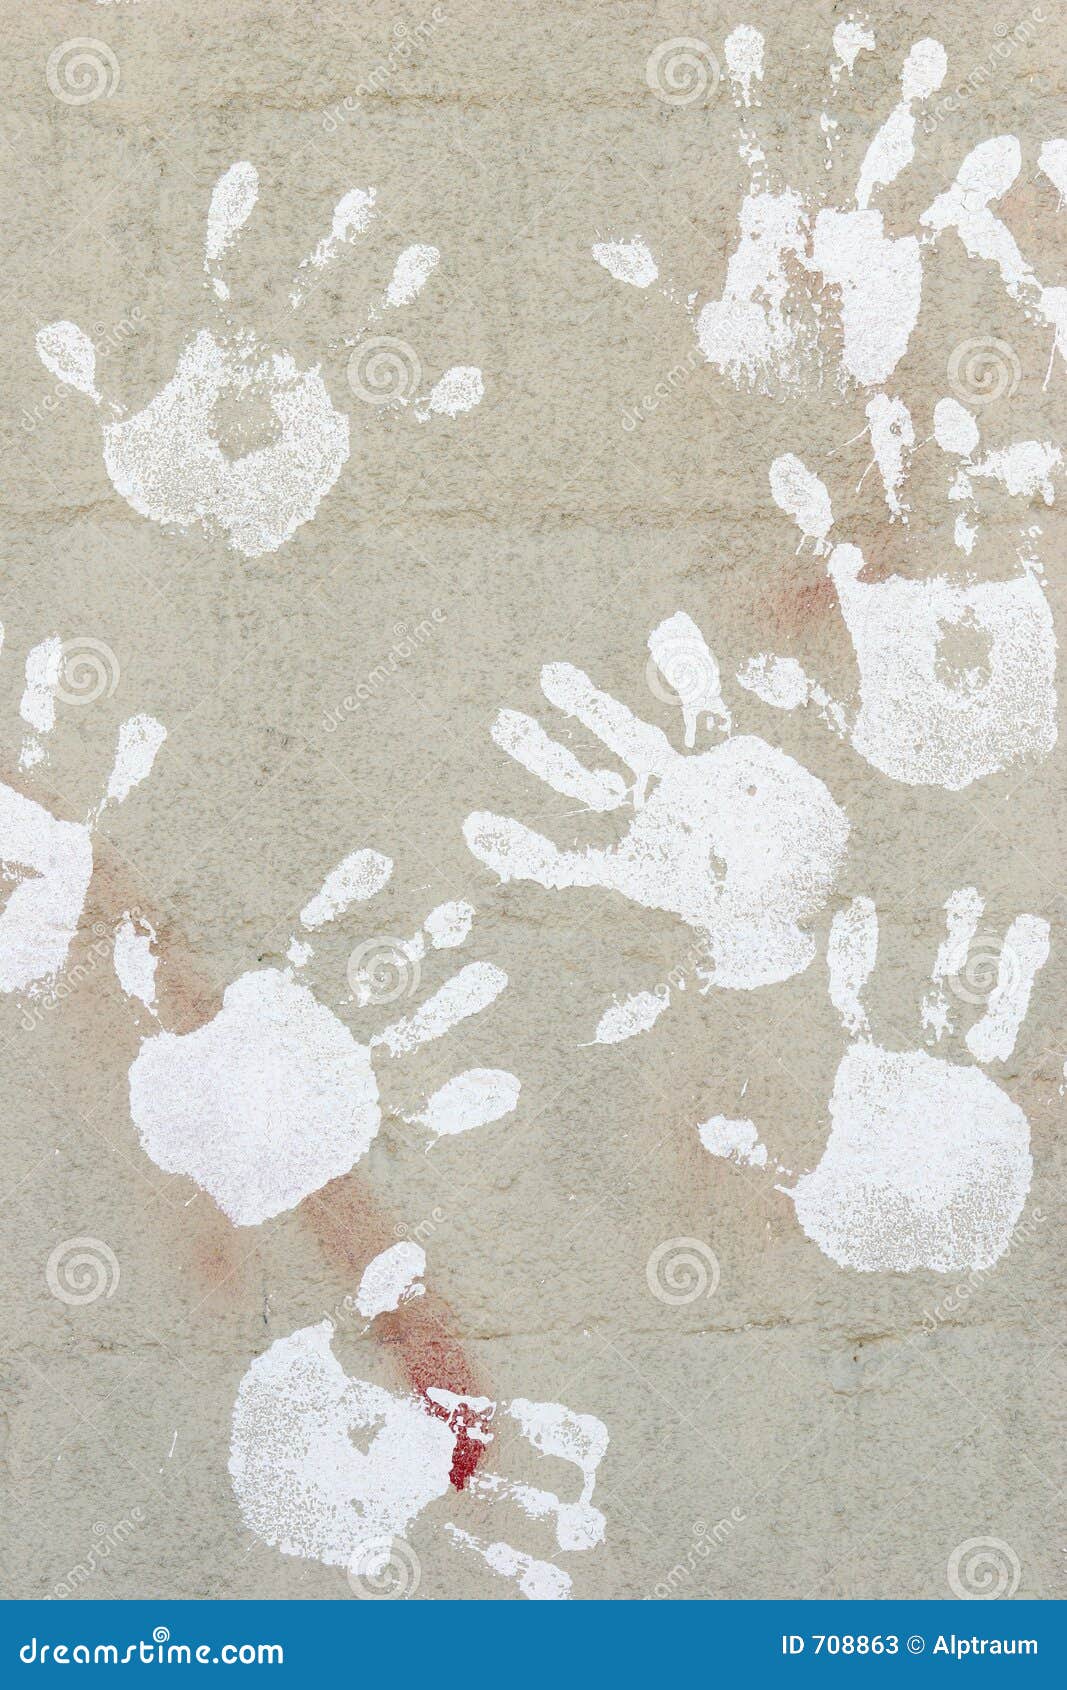 Handprints on cement stock illustration. Illustration of painting - 708863